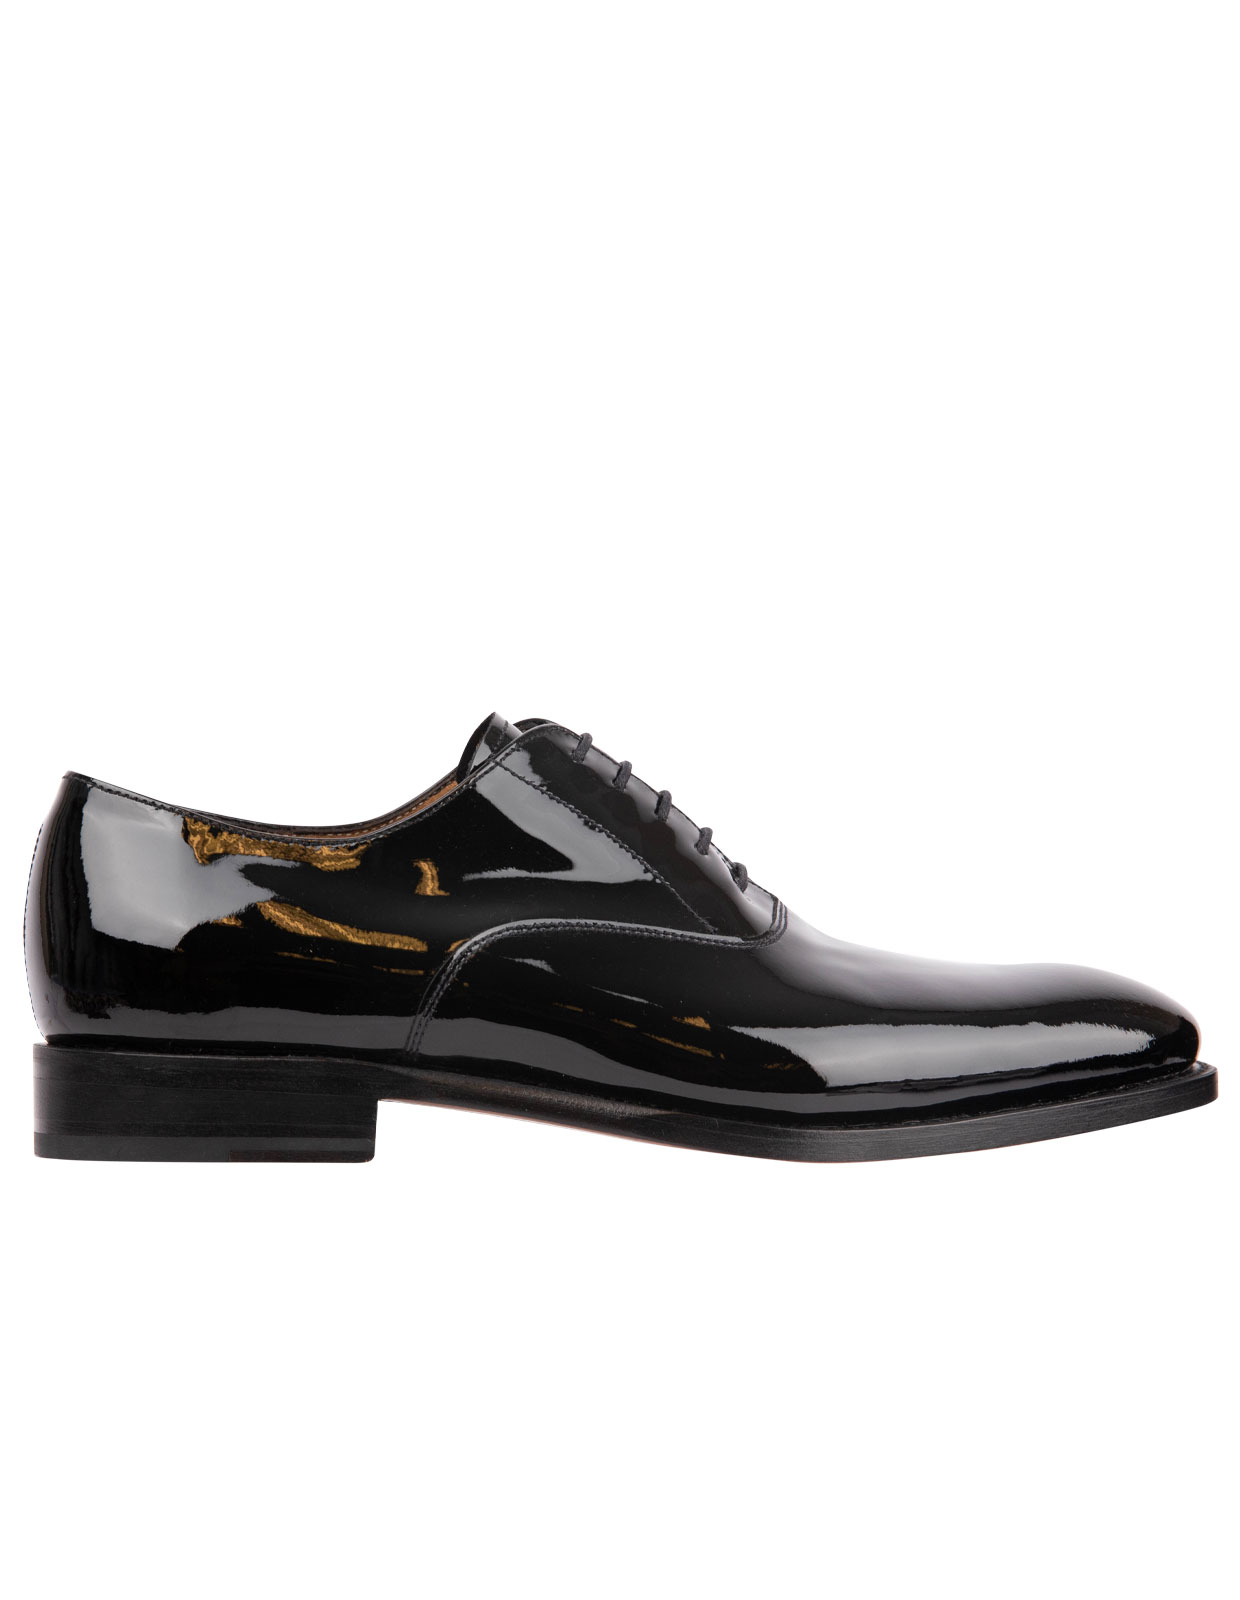 Patent Leather Oxford Shoe Black Stl 11.5